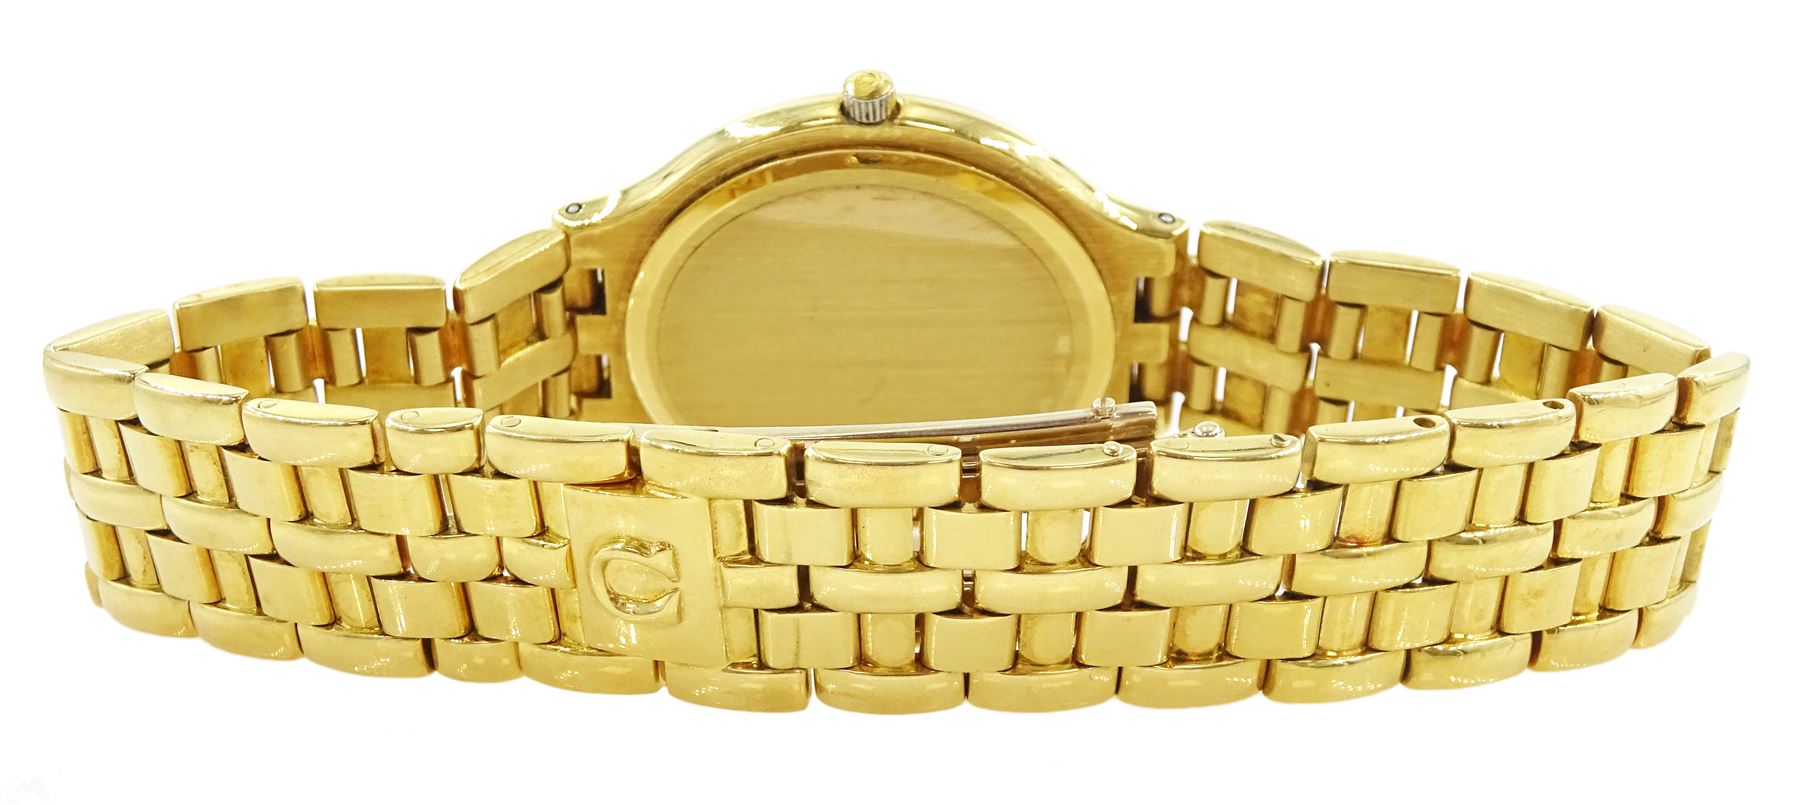 Omega gentleman's 18ct gold quartz wristwatch - Image 3 of 4